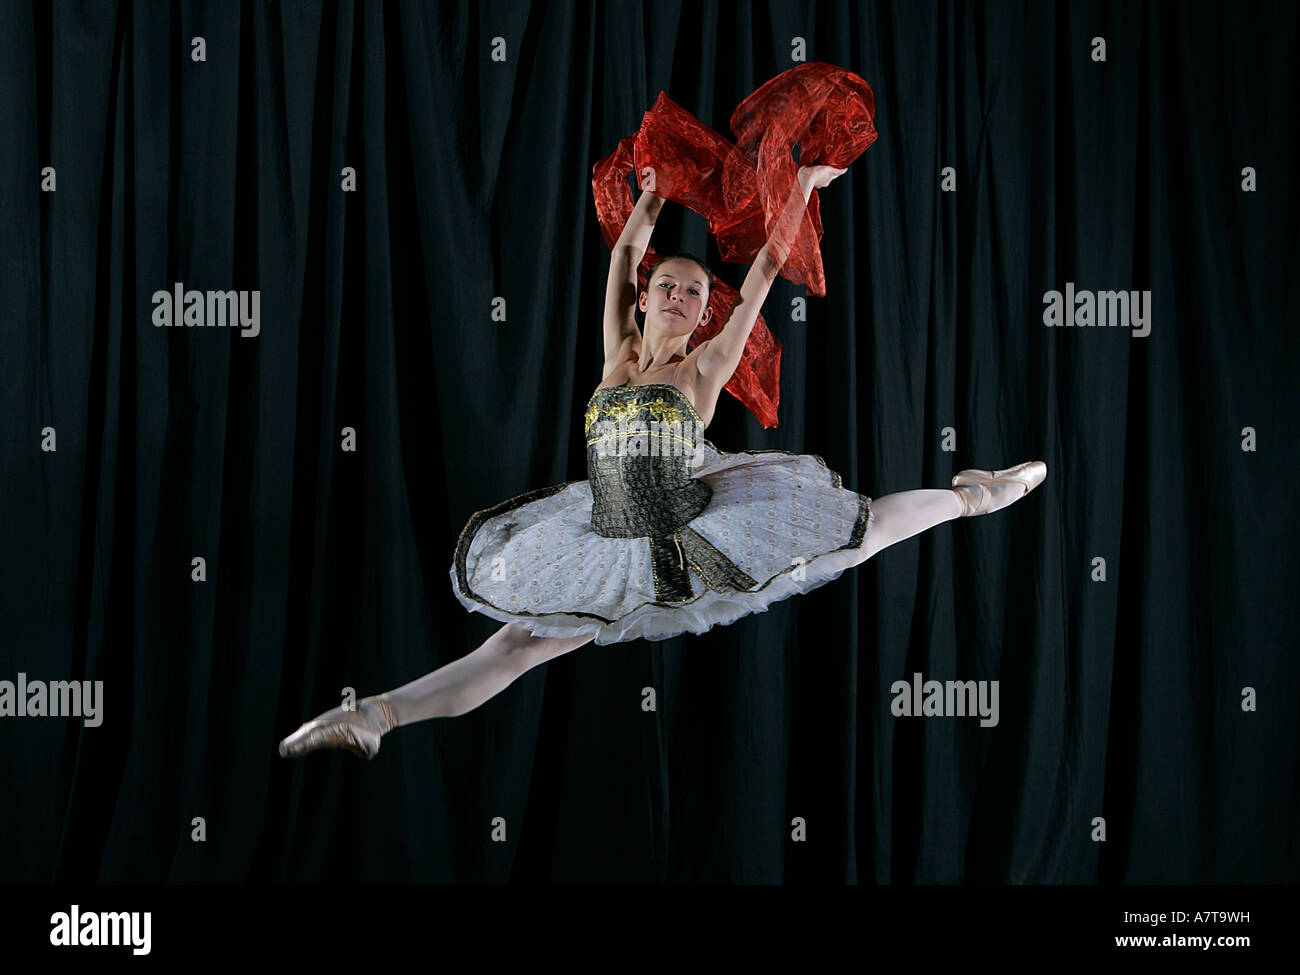 Ballerina leaping dance show performance Stock Photo